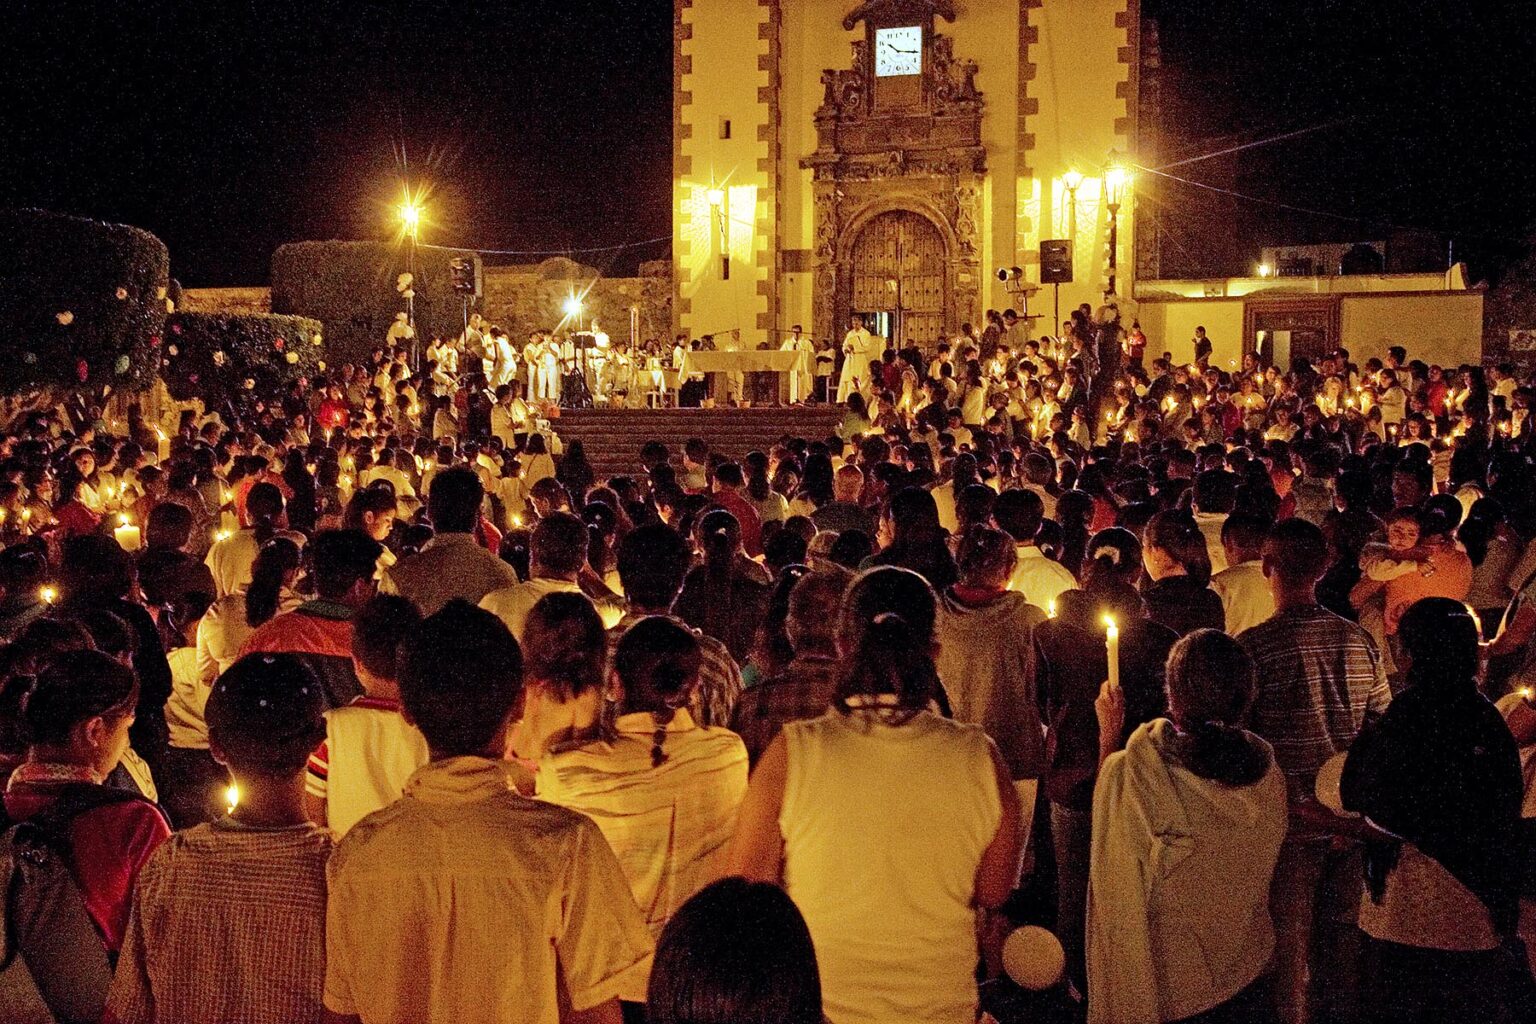 Devout CATHOLICS light candles during EASTER MASS at SAN ANTONIO CHURCH - SAN MIGUEL DE ALLENDE, MEXICO